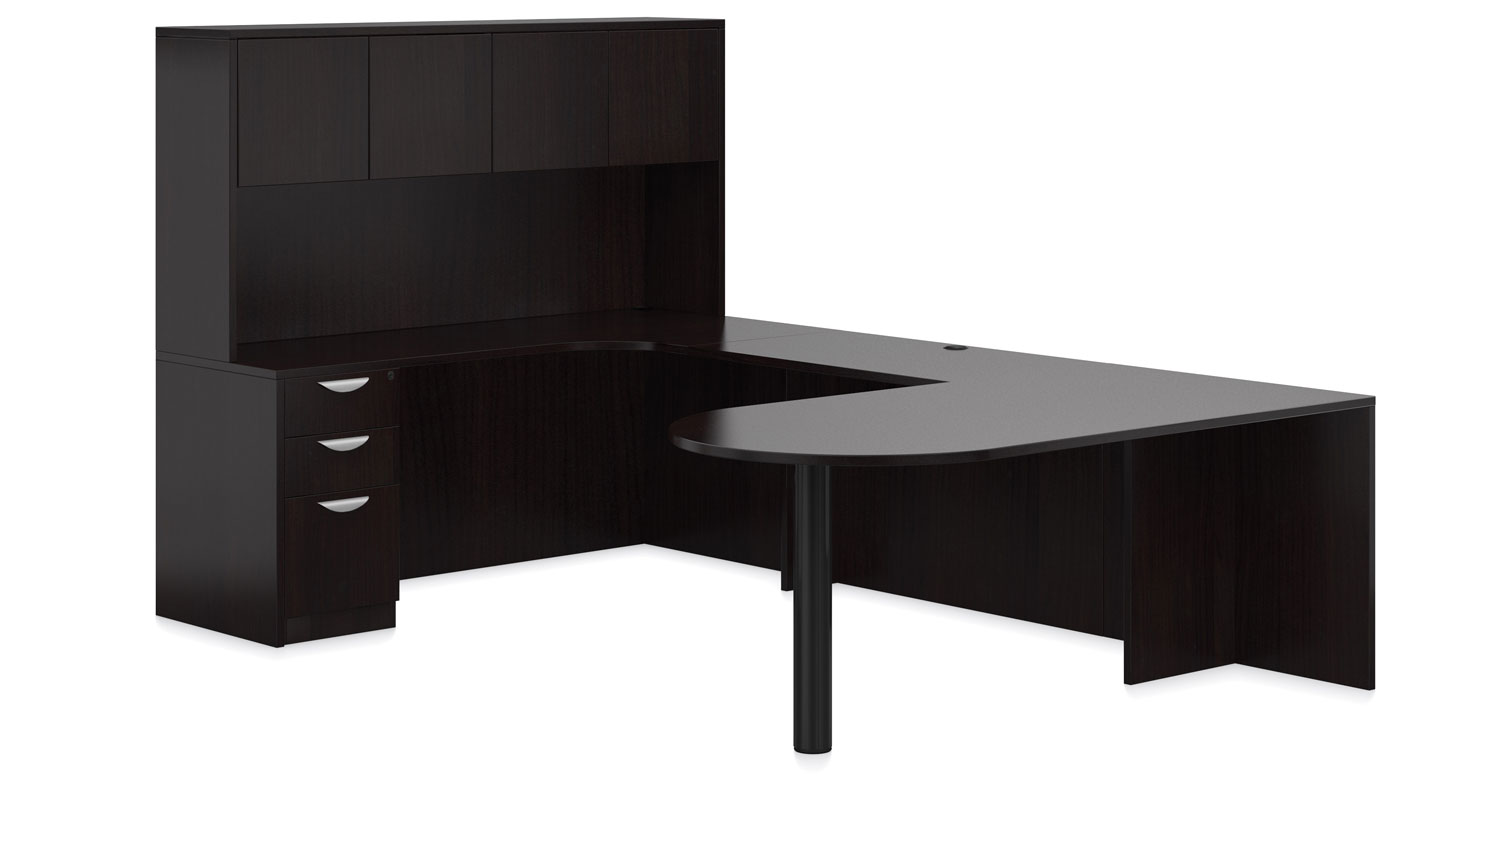 Affordable Office Furniture Desks from OTG - Shown in American Espresso woodgrain